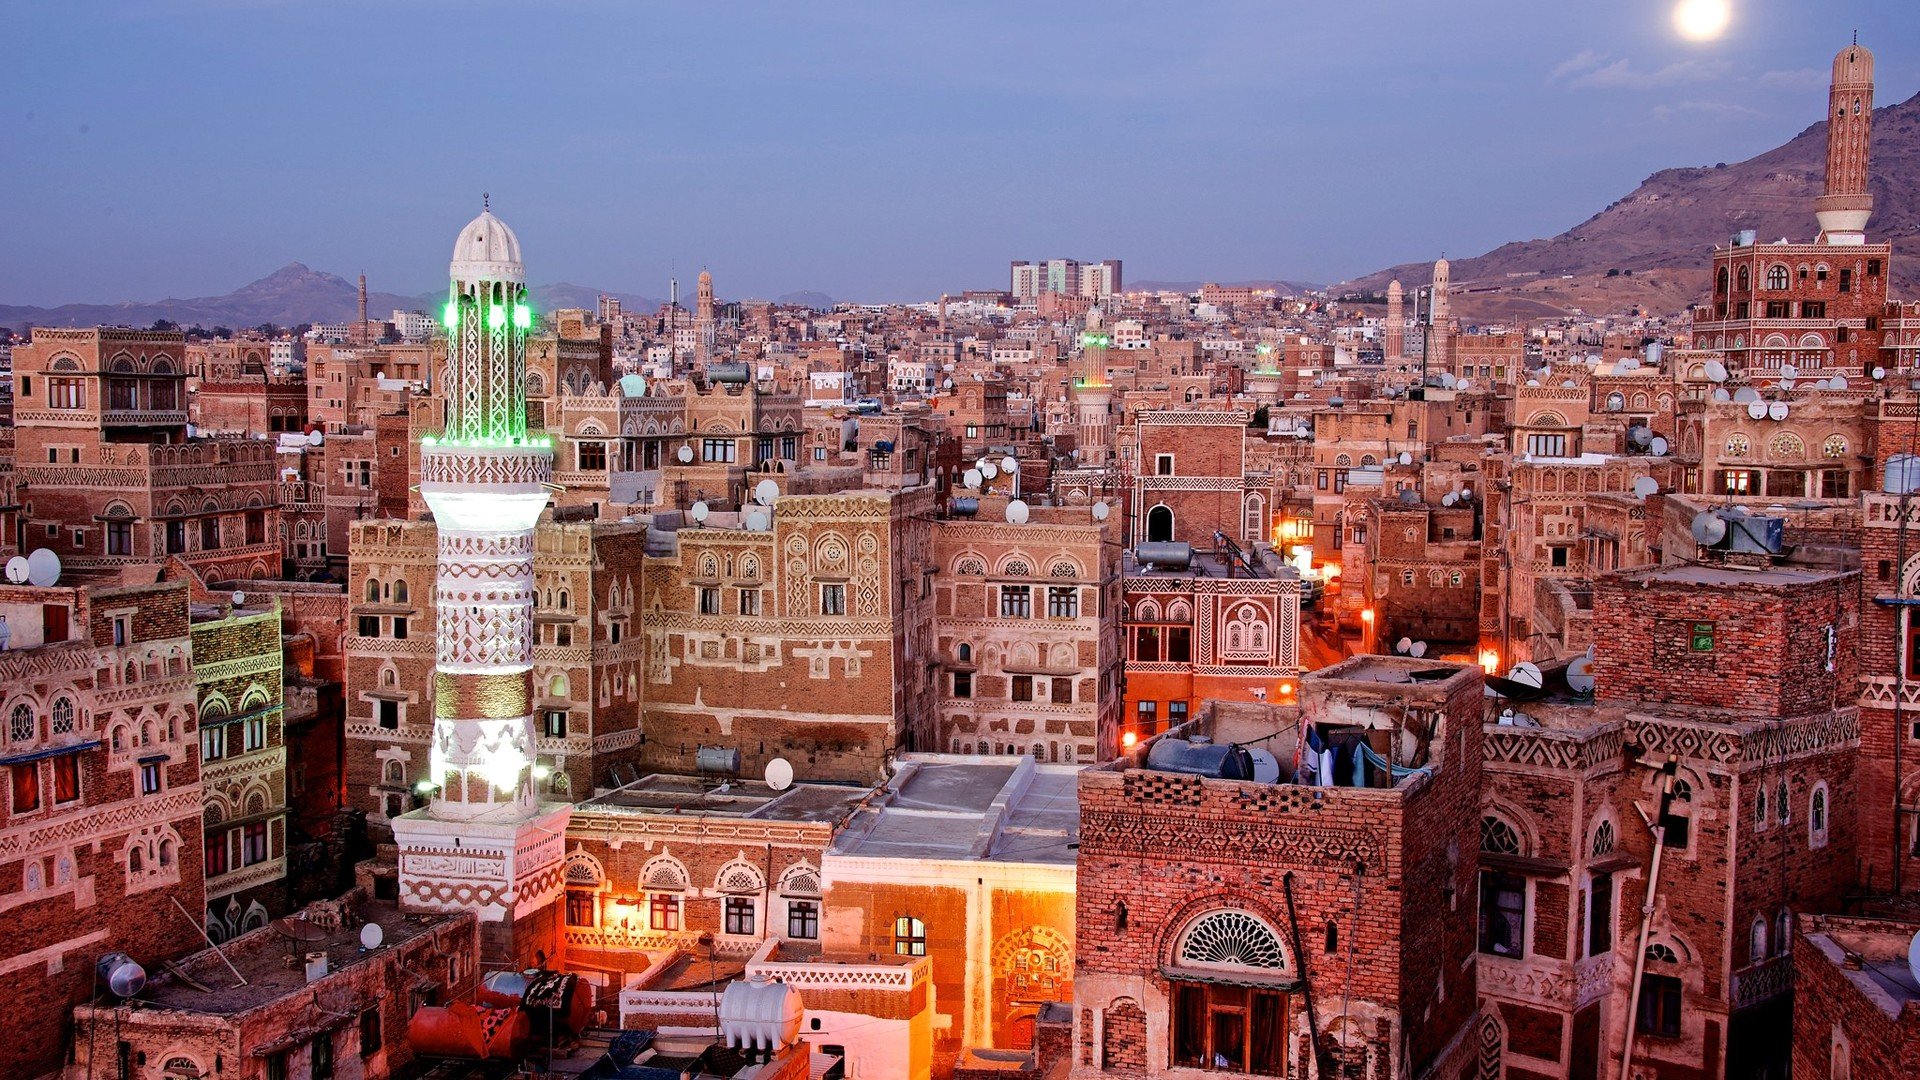 architecture, Building, City, Cityscape, Yemen, Old building, Mosque, Rooftops, Sun, Lights, Bricks Wallpaper